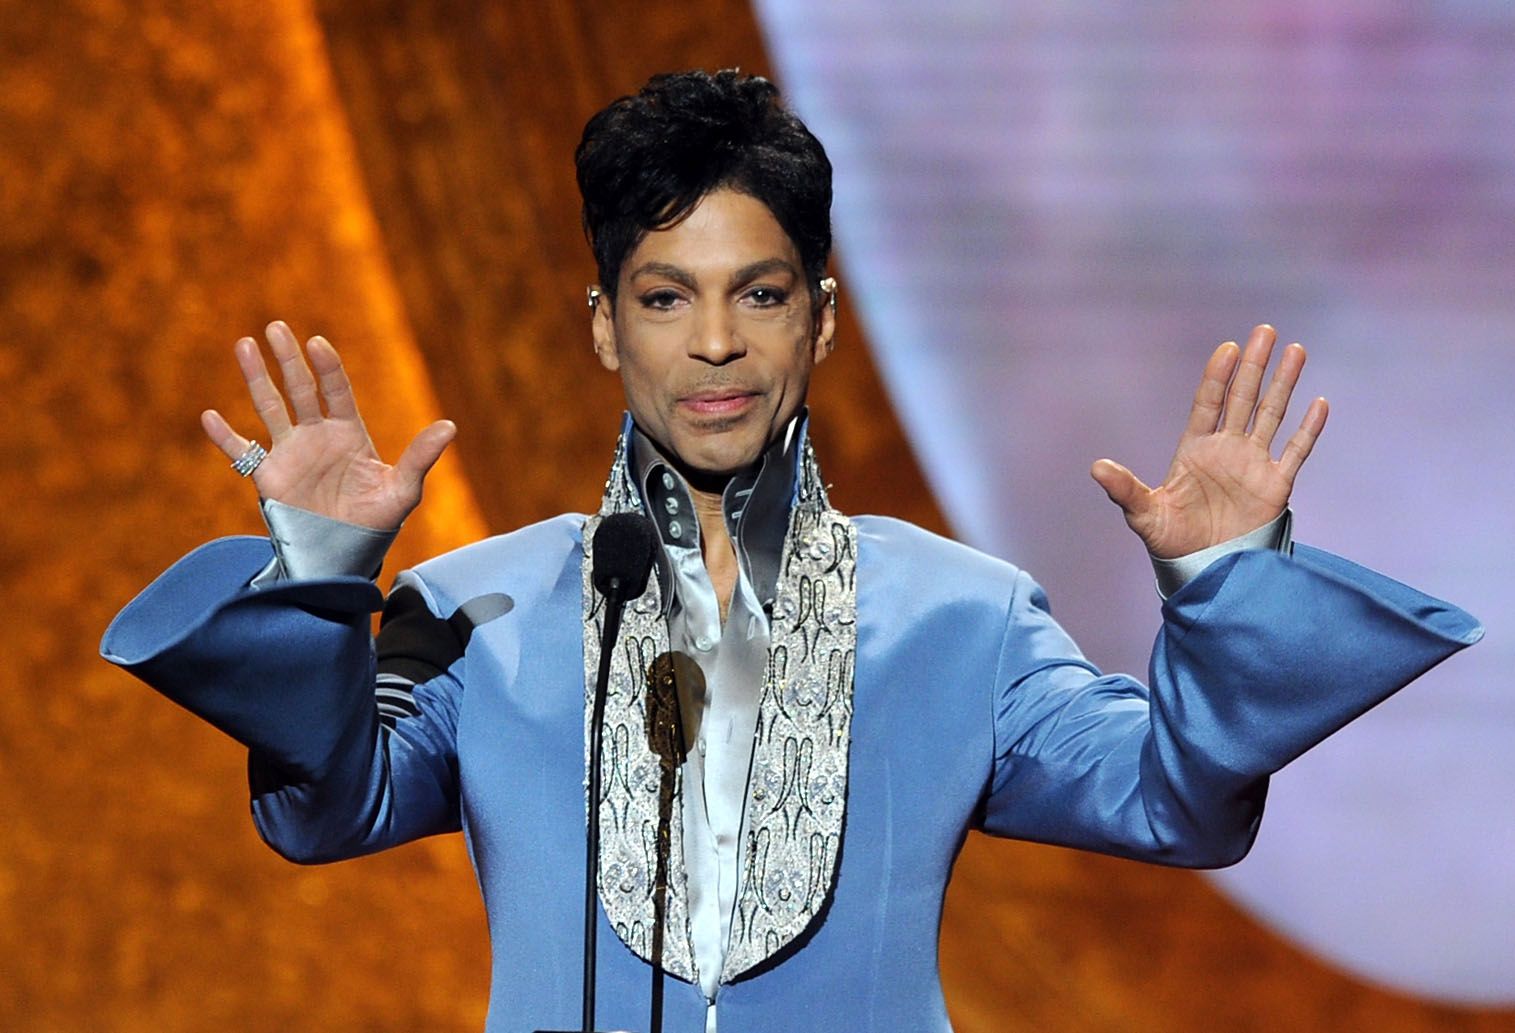 Prince en Los Angeles en 2011. | Foto: Getty Images